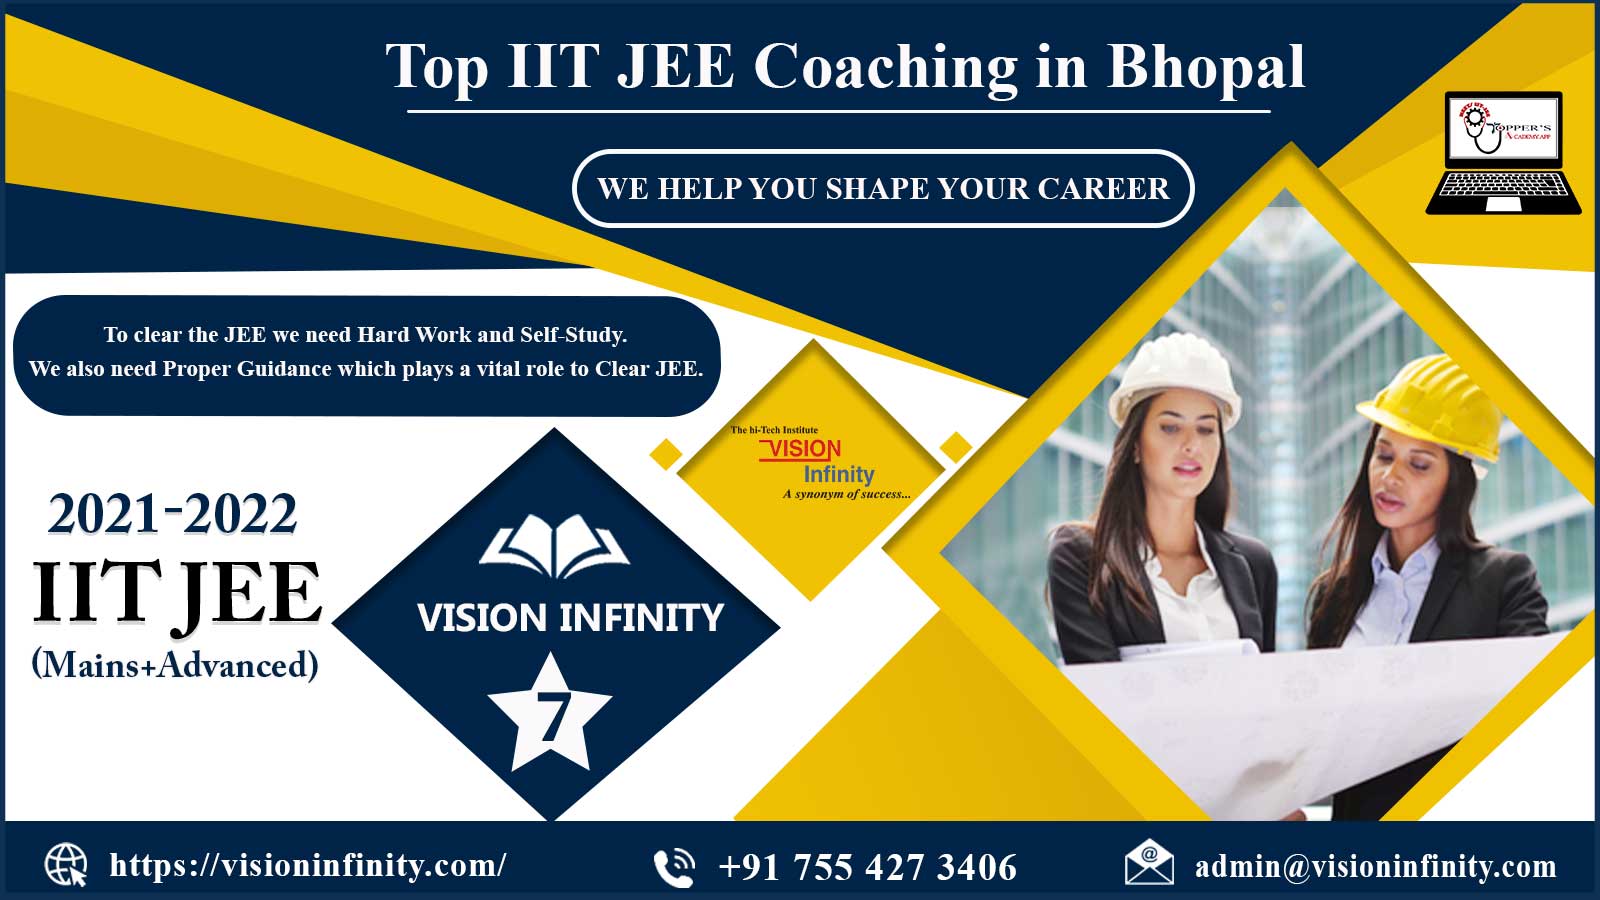 Vision Infinity Ltd. in Bhopal